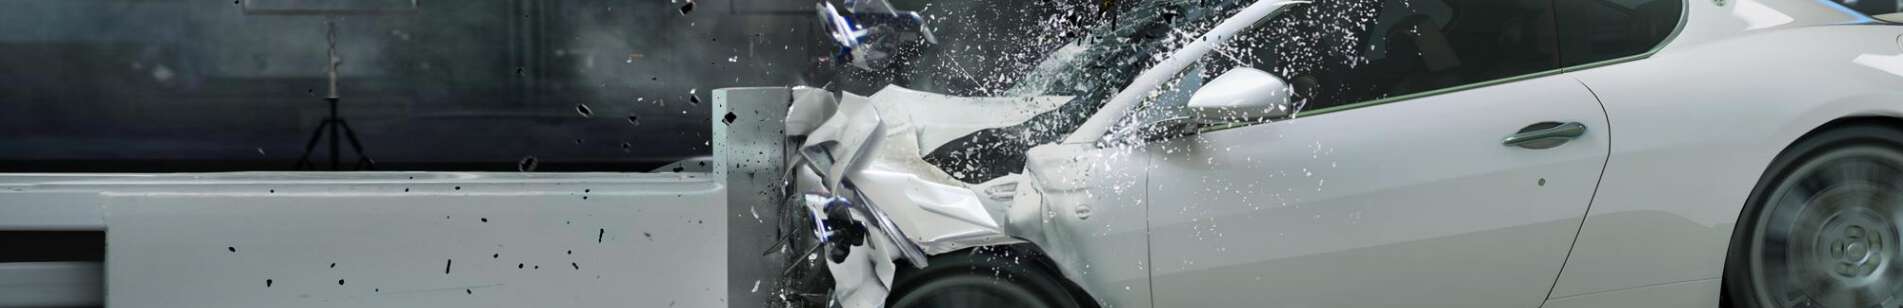 Car damage during a crash test.